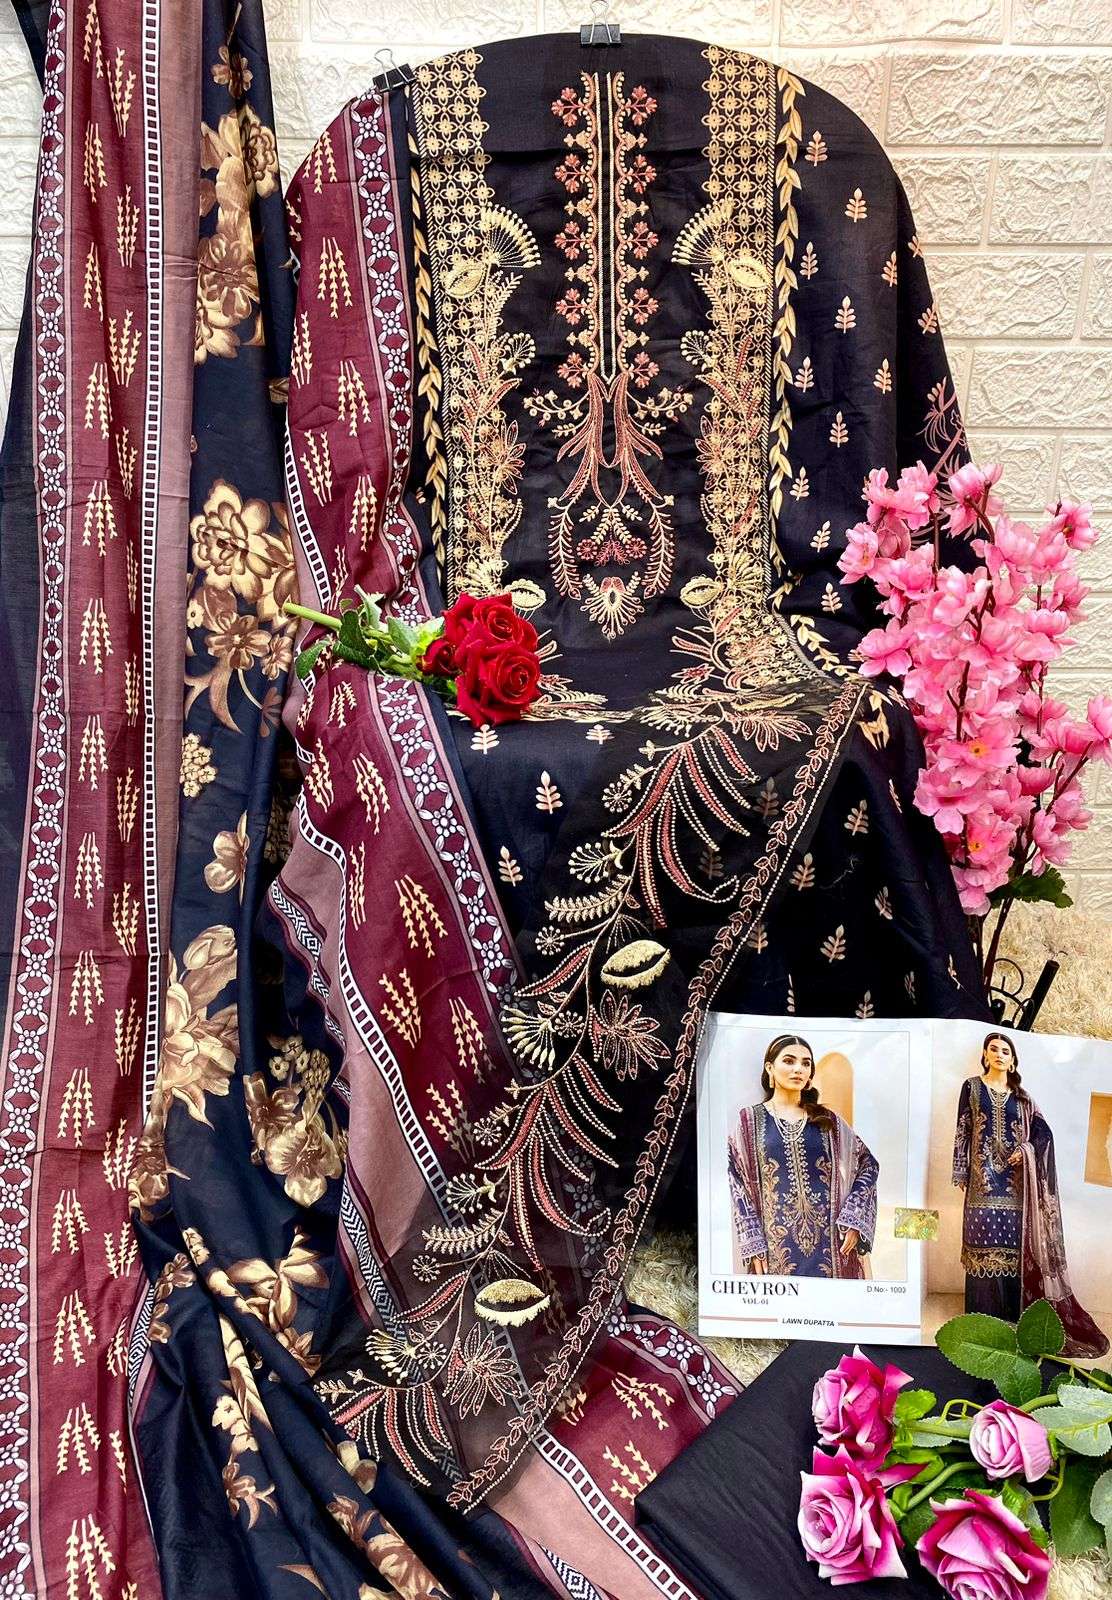 shraddha designer chevron vol-1 1001-1004 series fancy designer salwar kameez catalogue wholesale price surat 